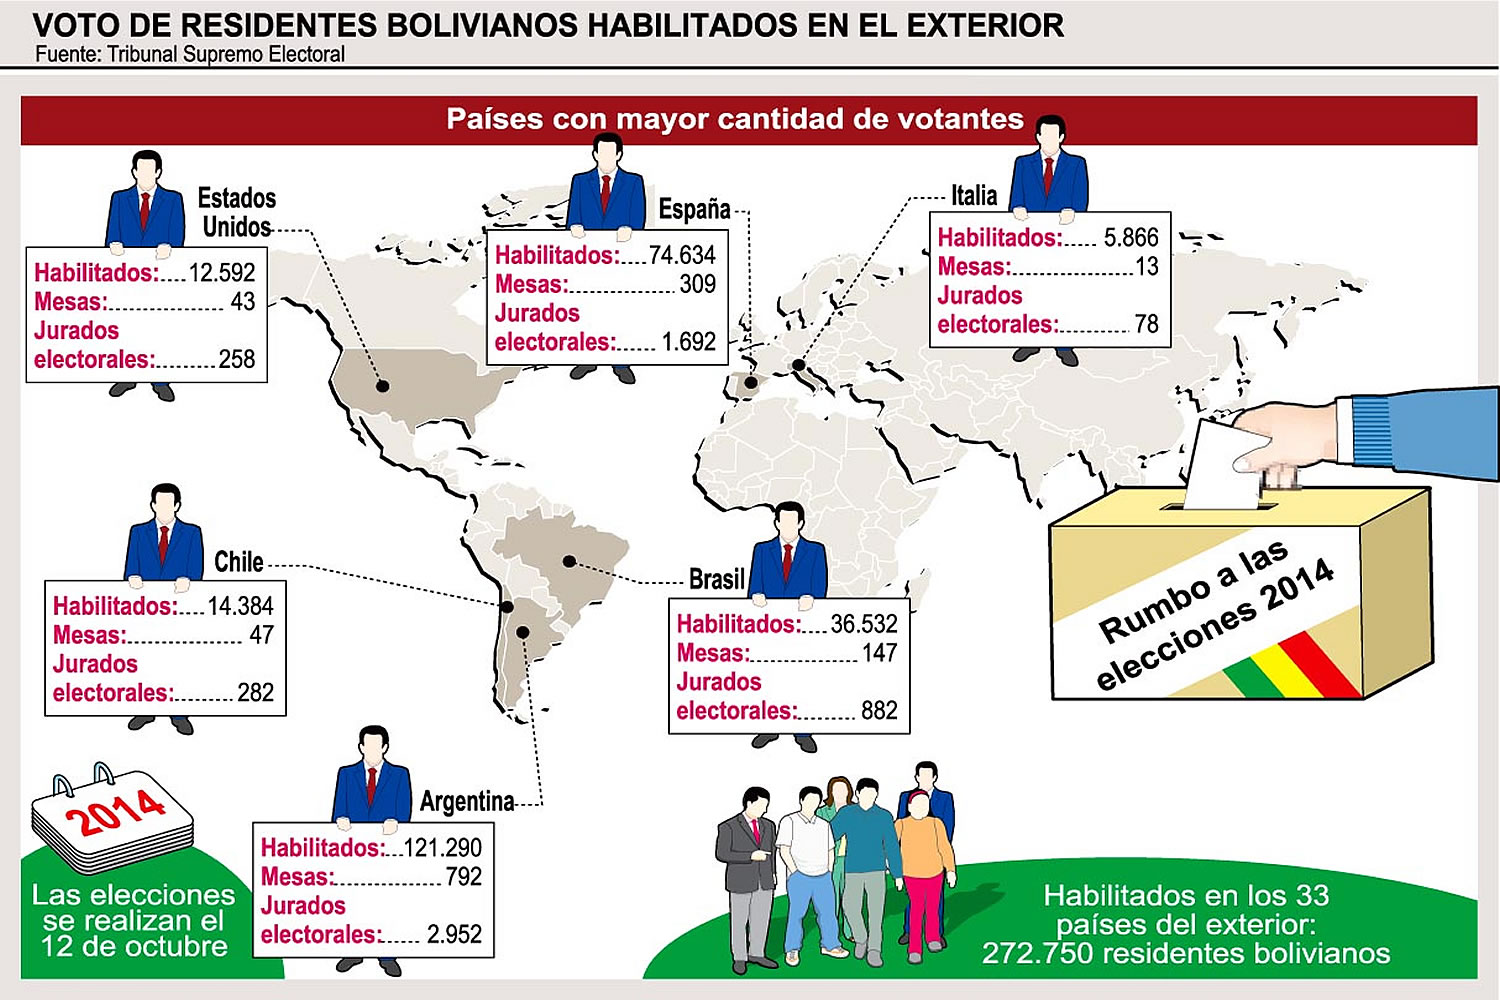 Voto de residentes bolivianos habilitados en el exterior.(Infografia: Javier Pereira/Cambio)